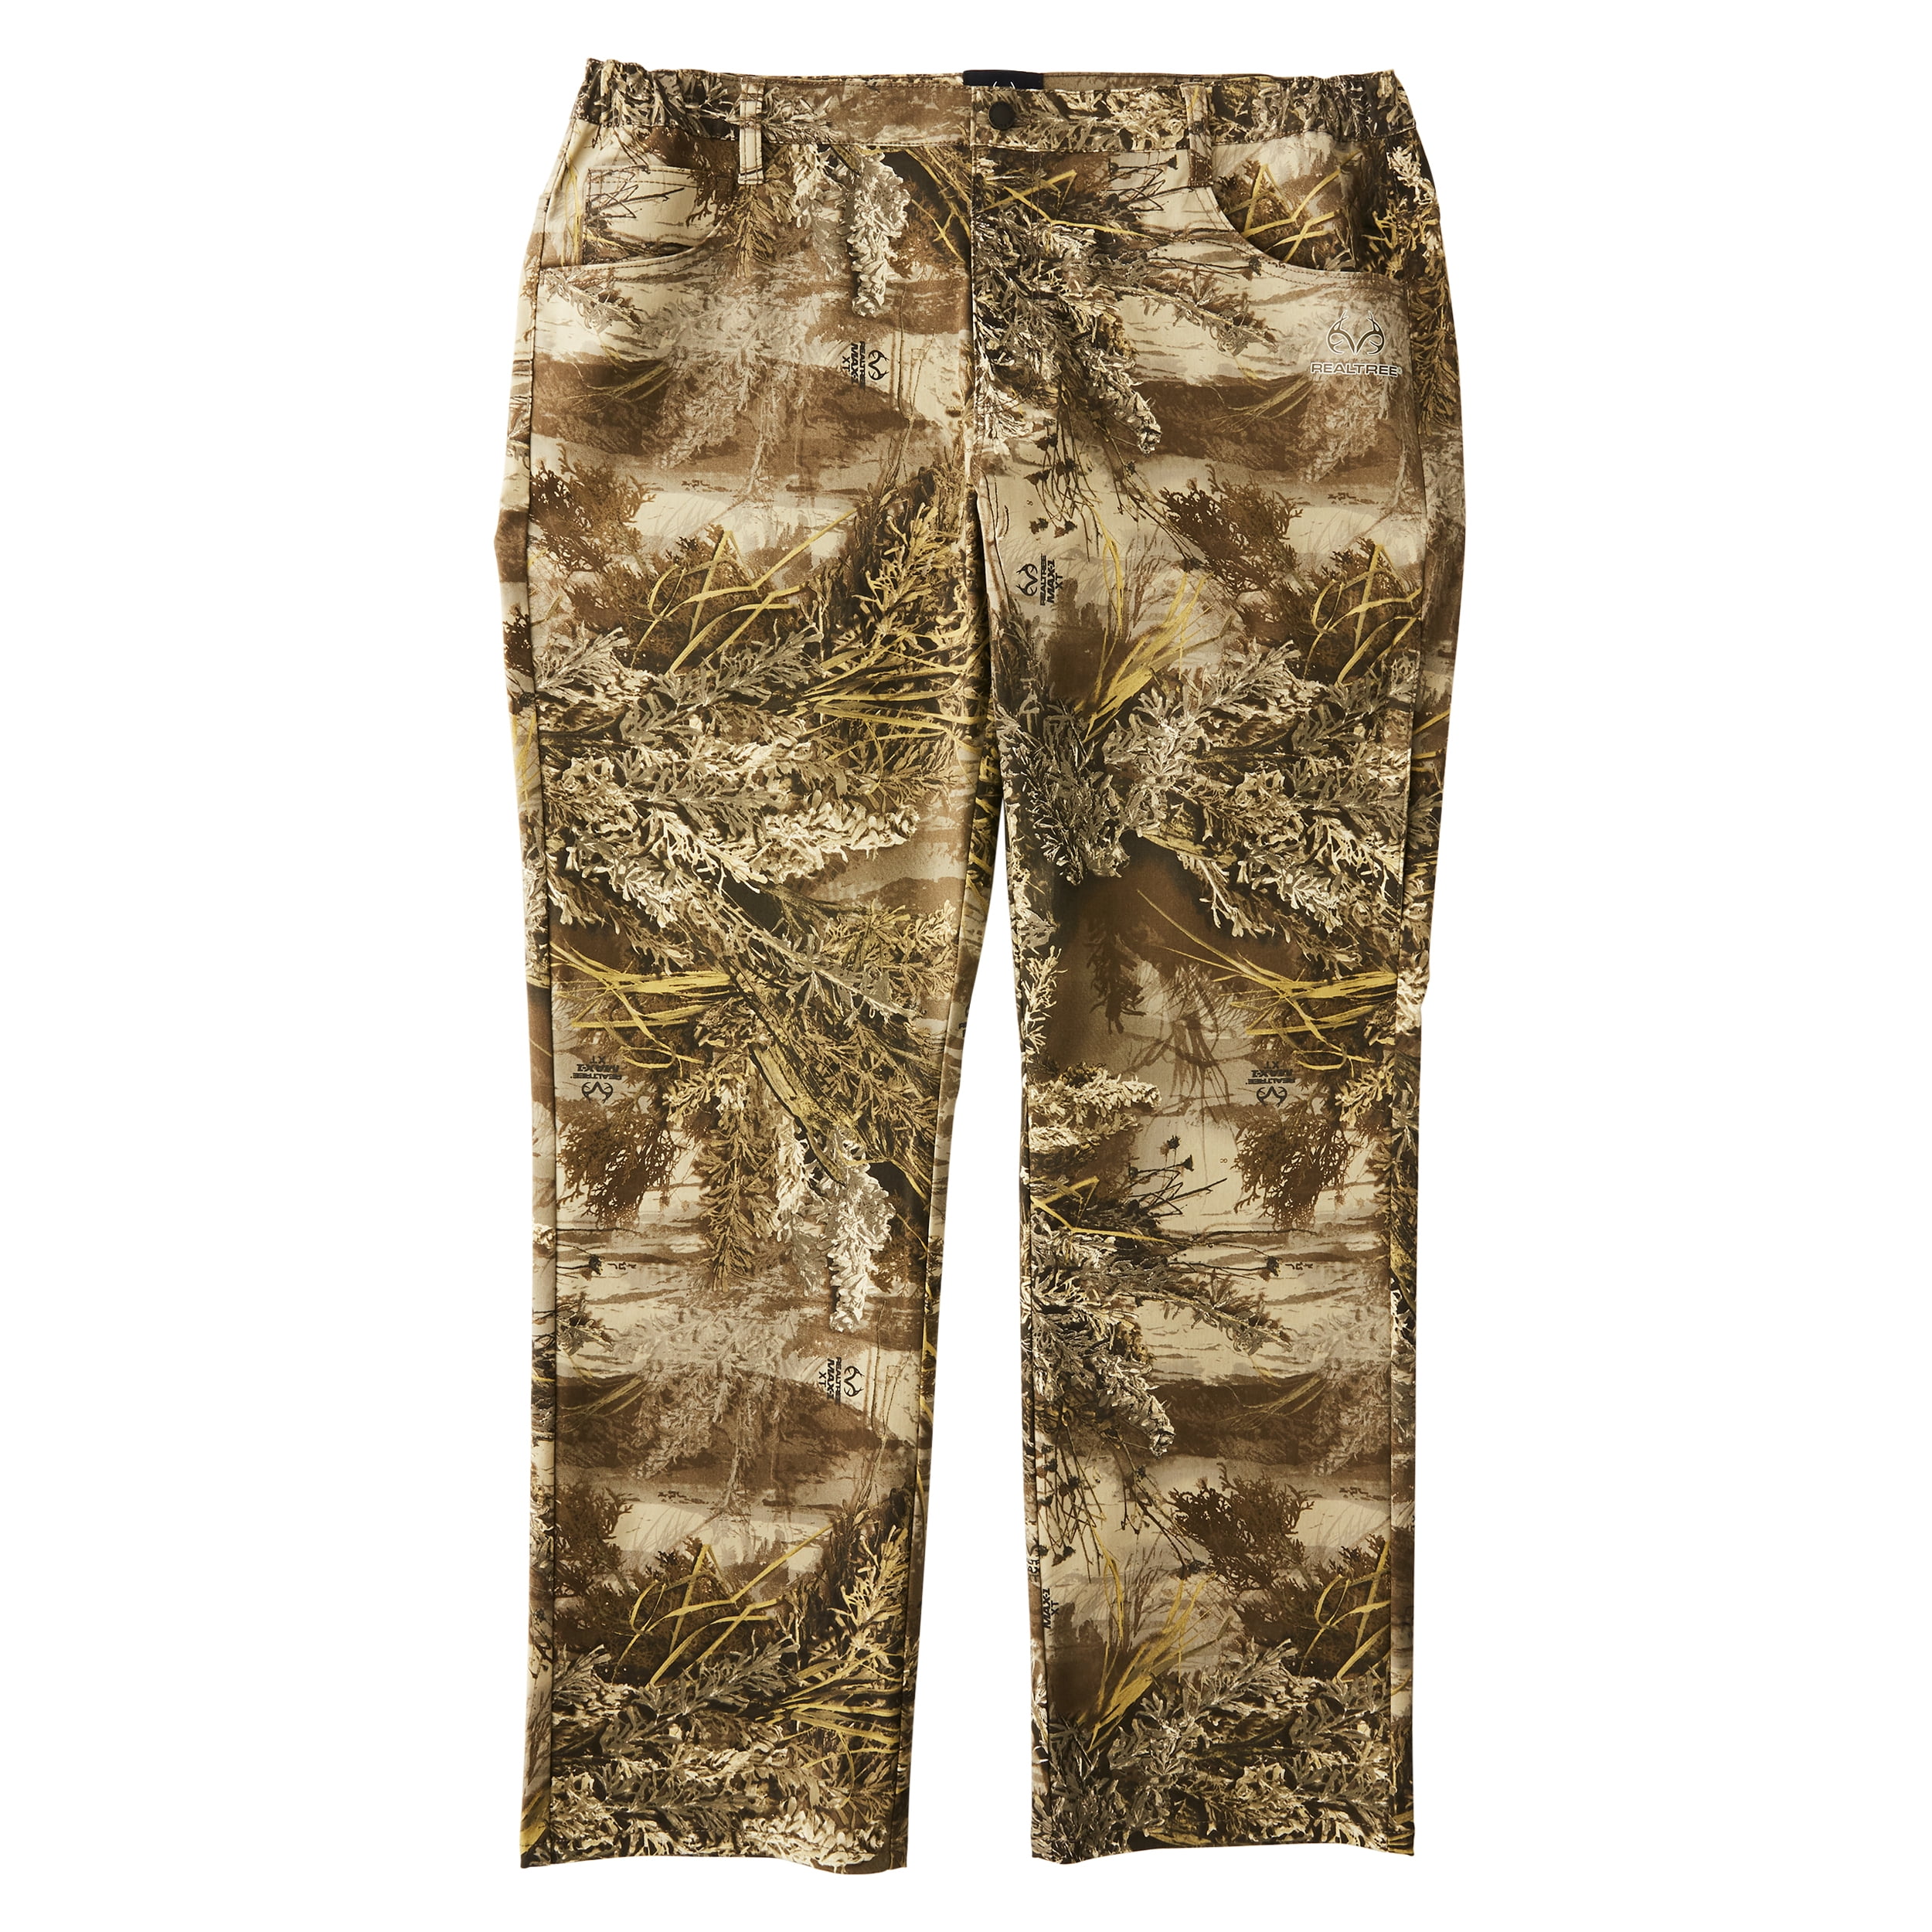 REALTREE MAX-1 XT 5 Pocket Pants Camo Camouflage Hunting Pants Size XL 40-42 1 